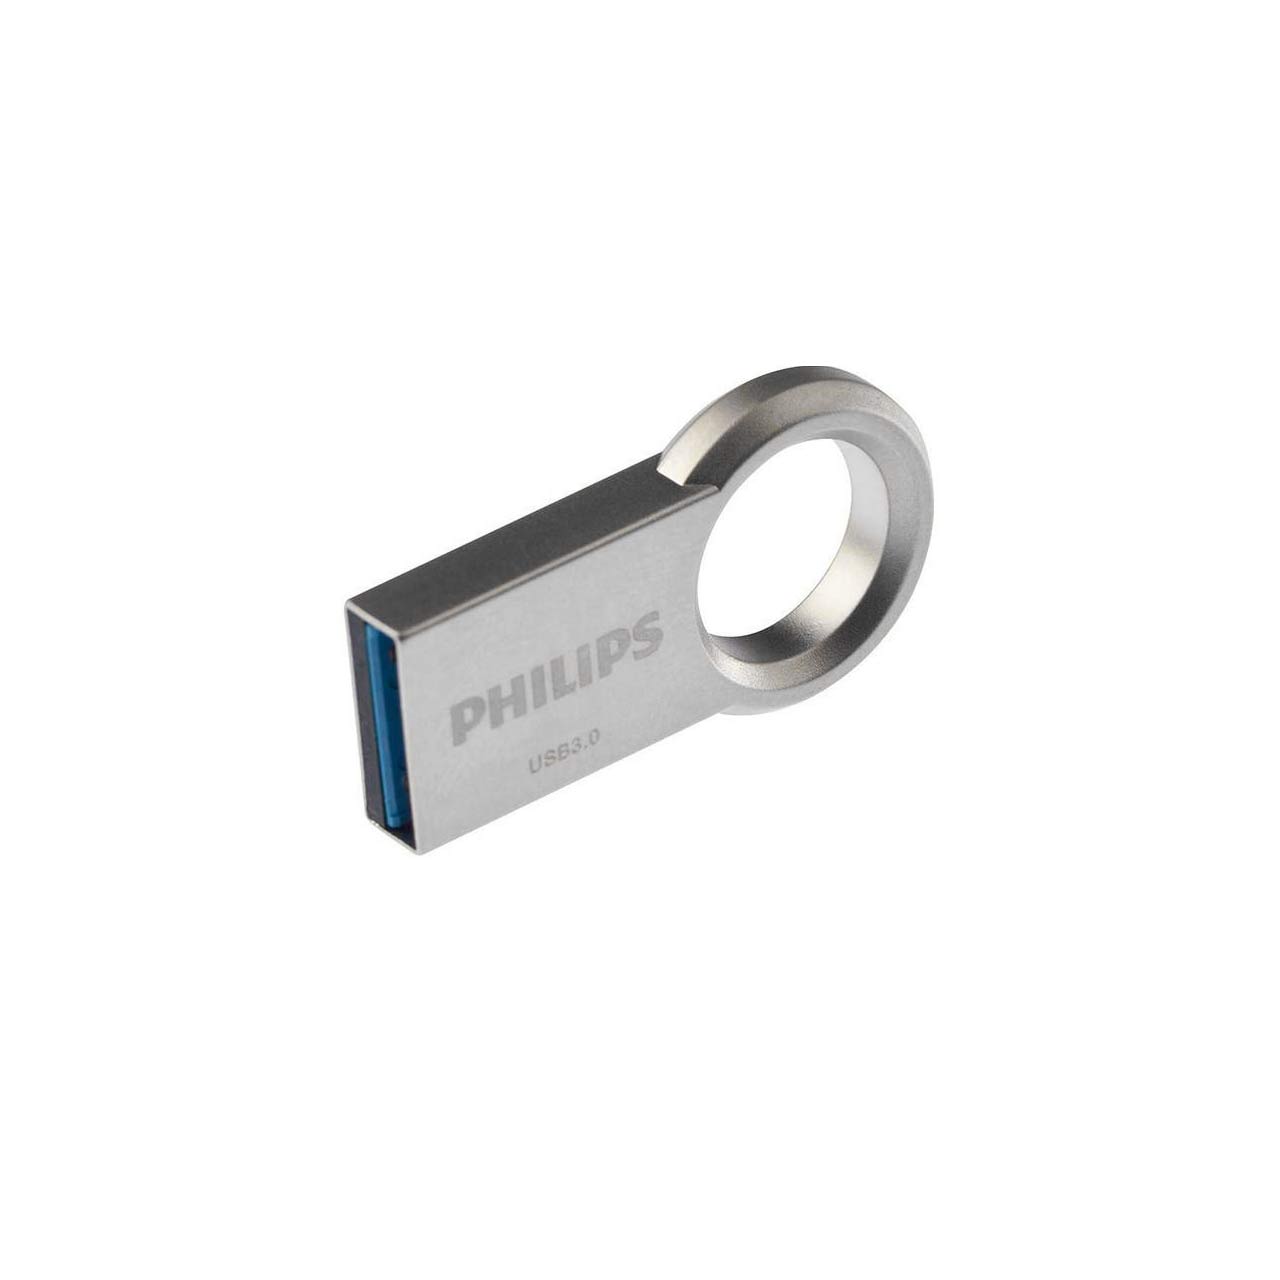 Philips CirCle FM32FD145B USB 3.0 Flash Memory - 32GB فلش